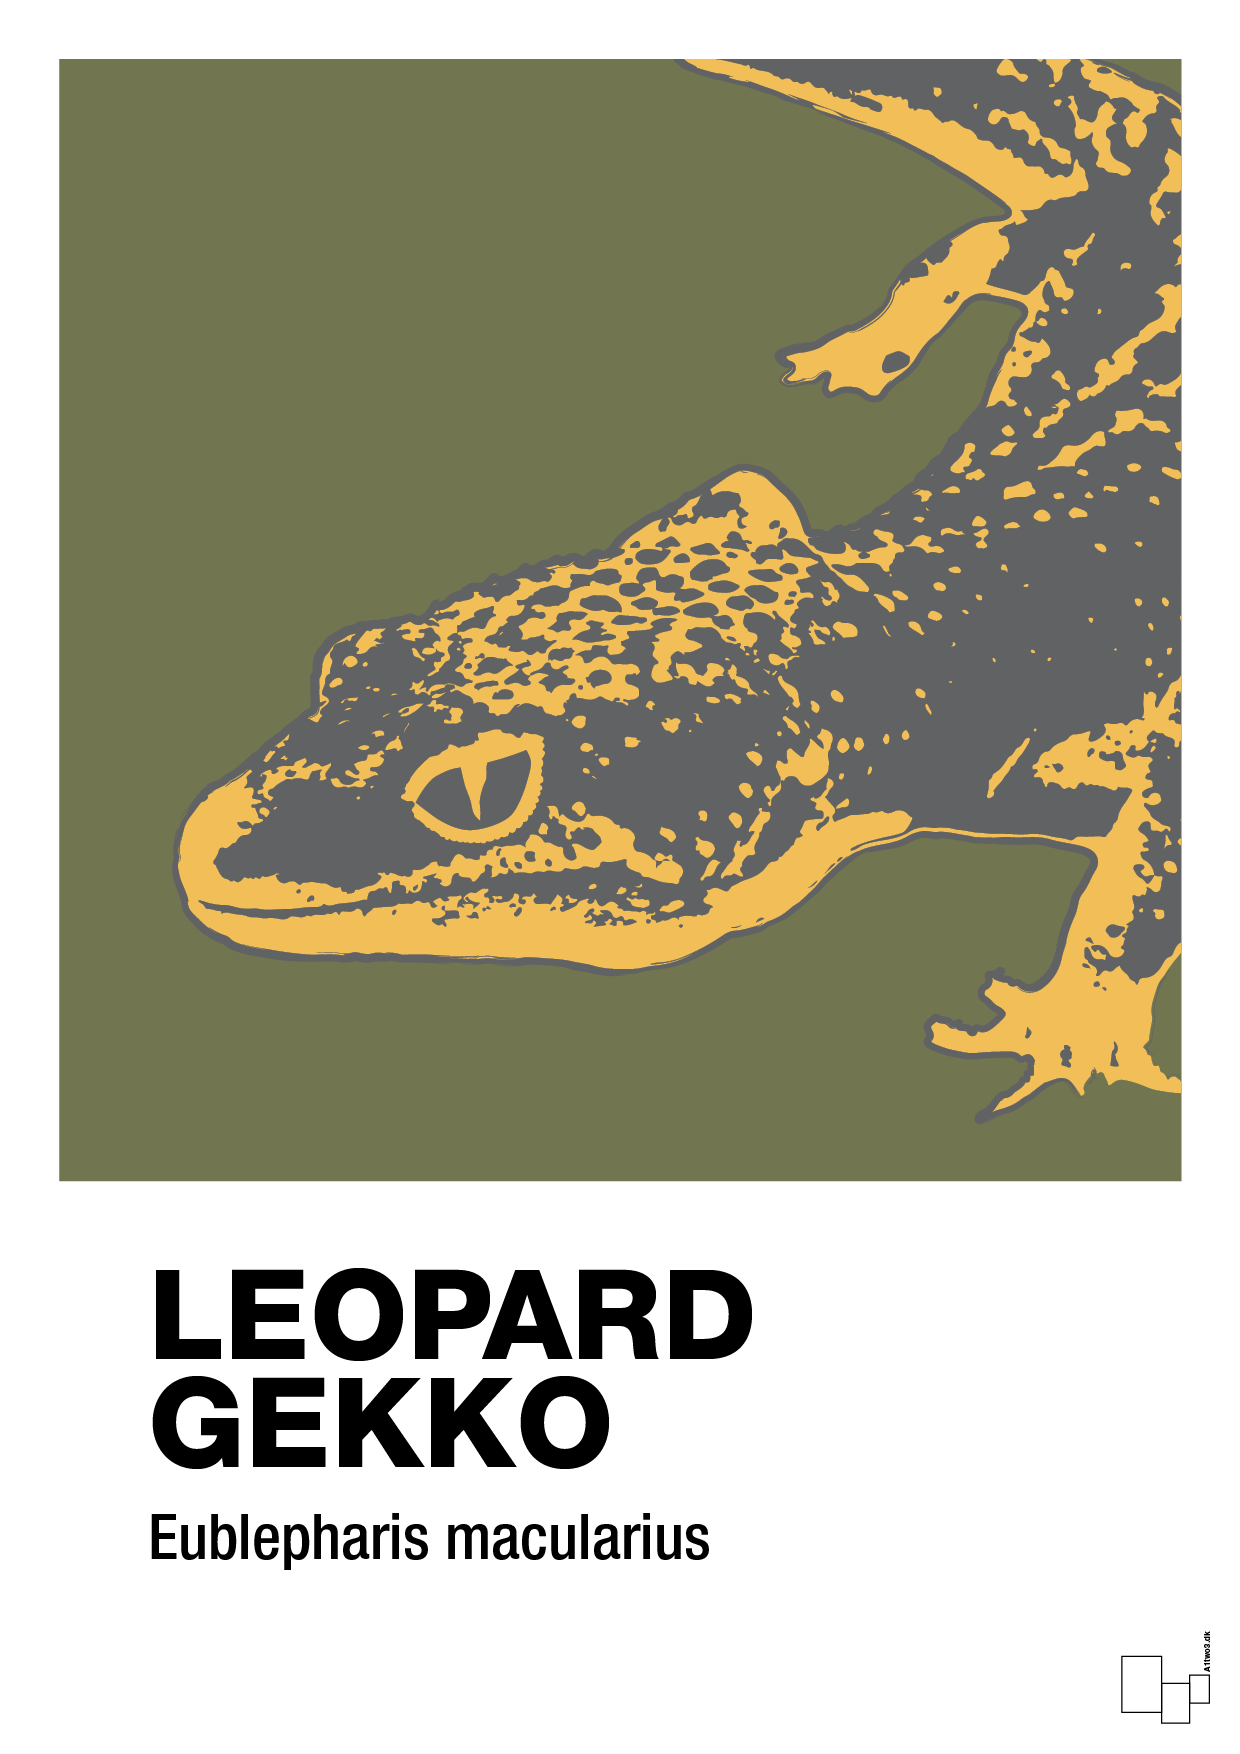 leopard gekko - Plakat med Videnskab i Secret Meadow